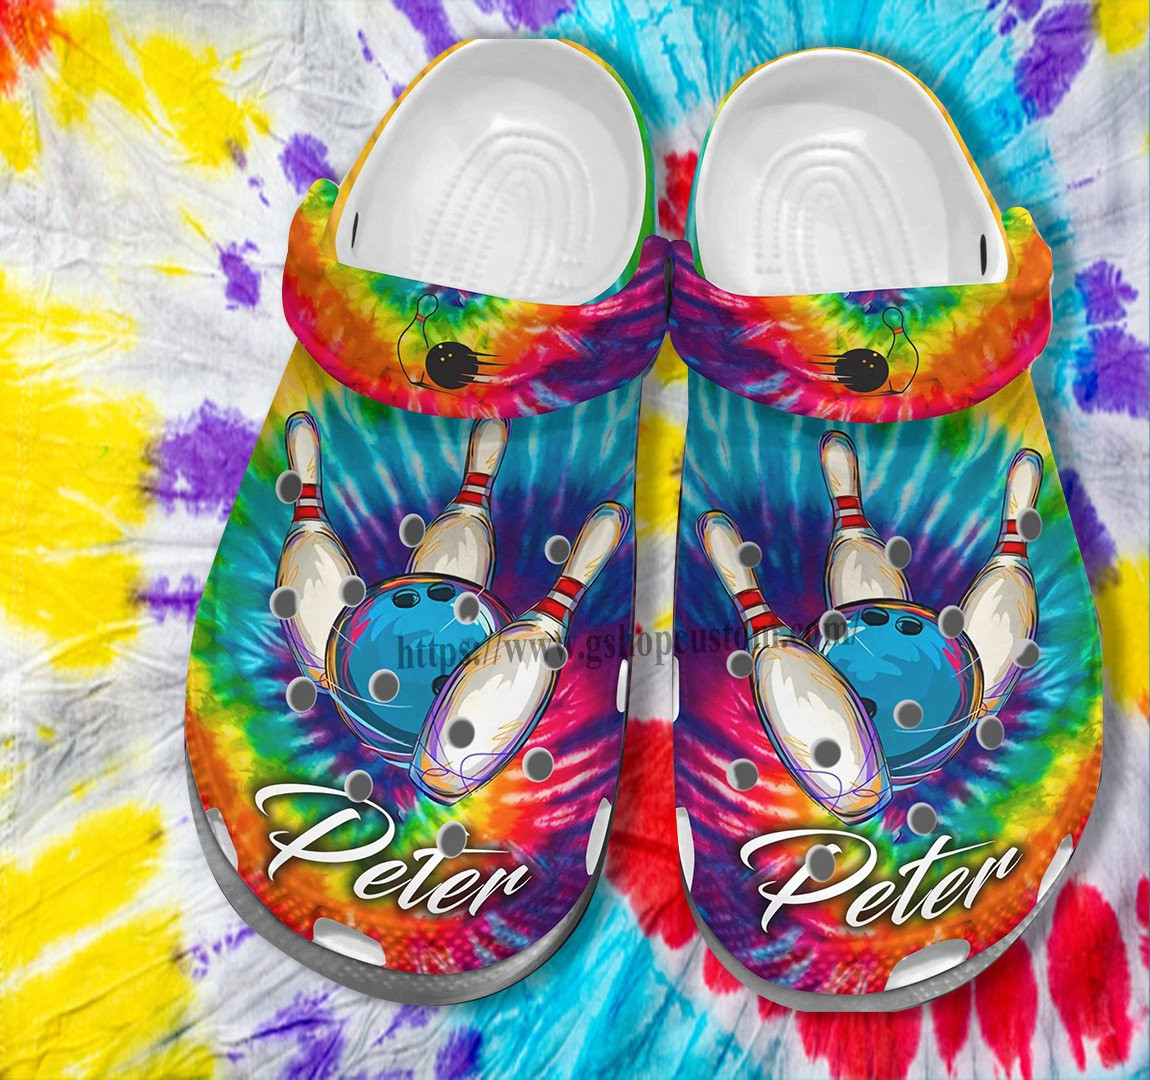 Hippie Bowling Team Crocs Shoes For Men Women- Rainbow Bowling Shoes Croc Clogs Customize Name